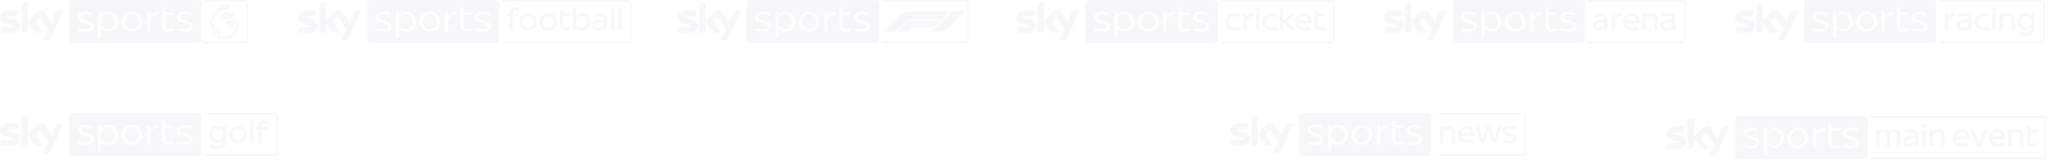 sky sports box office xbox